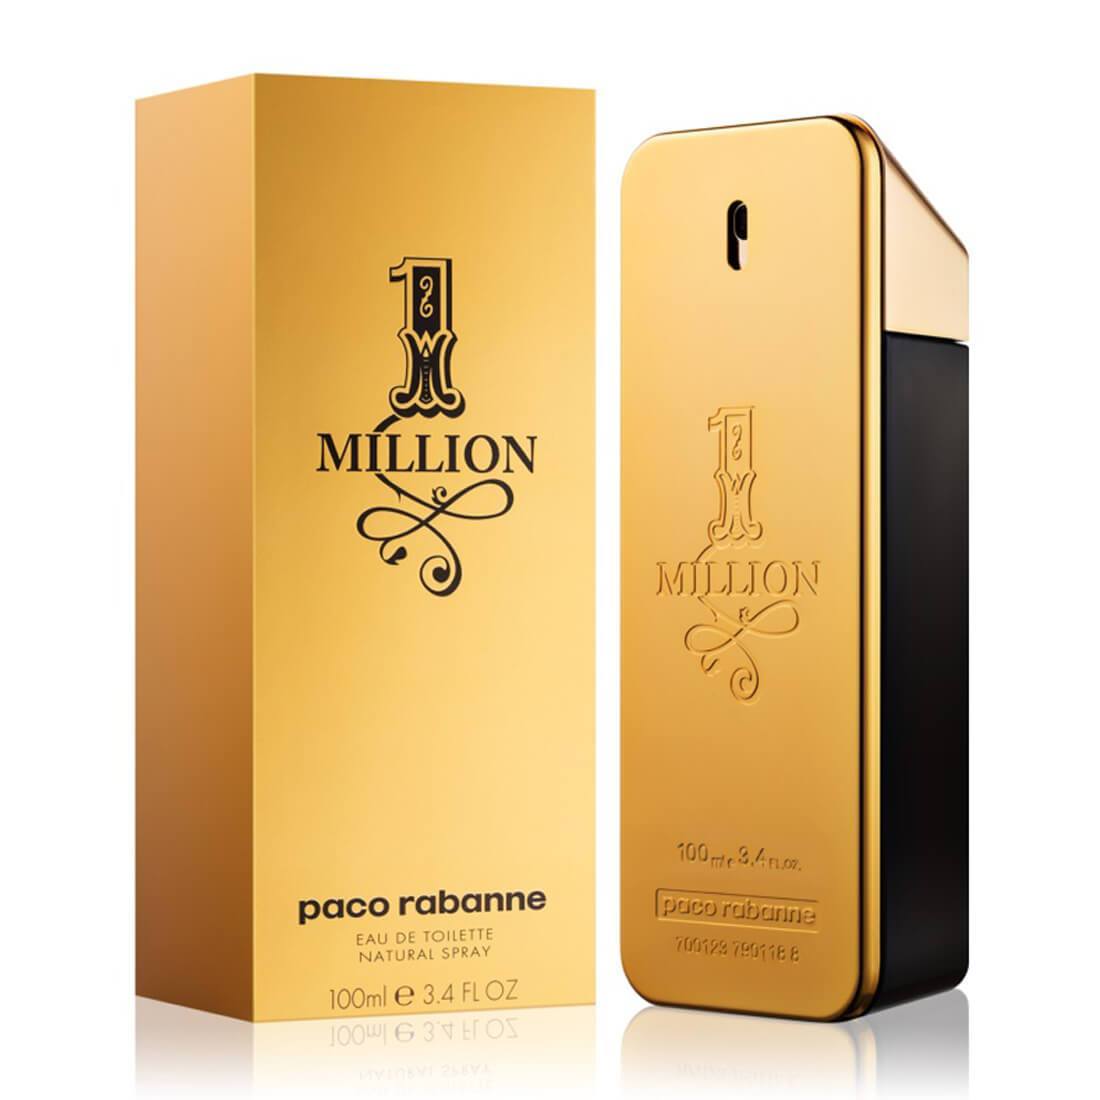 one million classic perfume